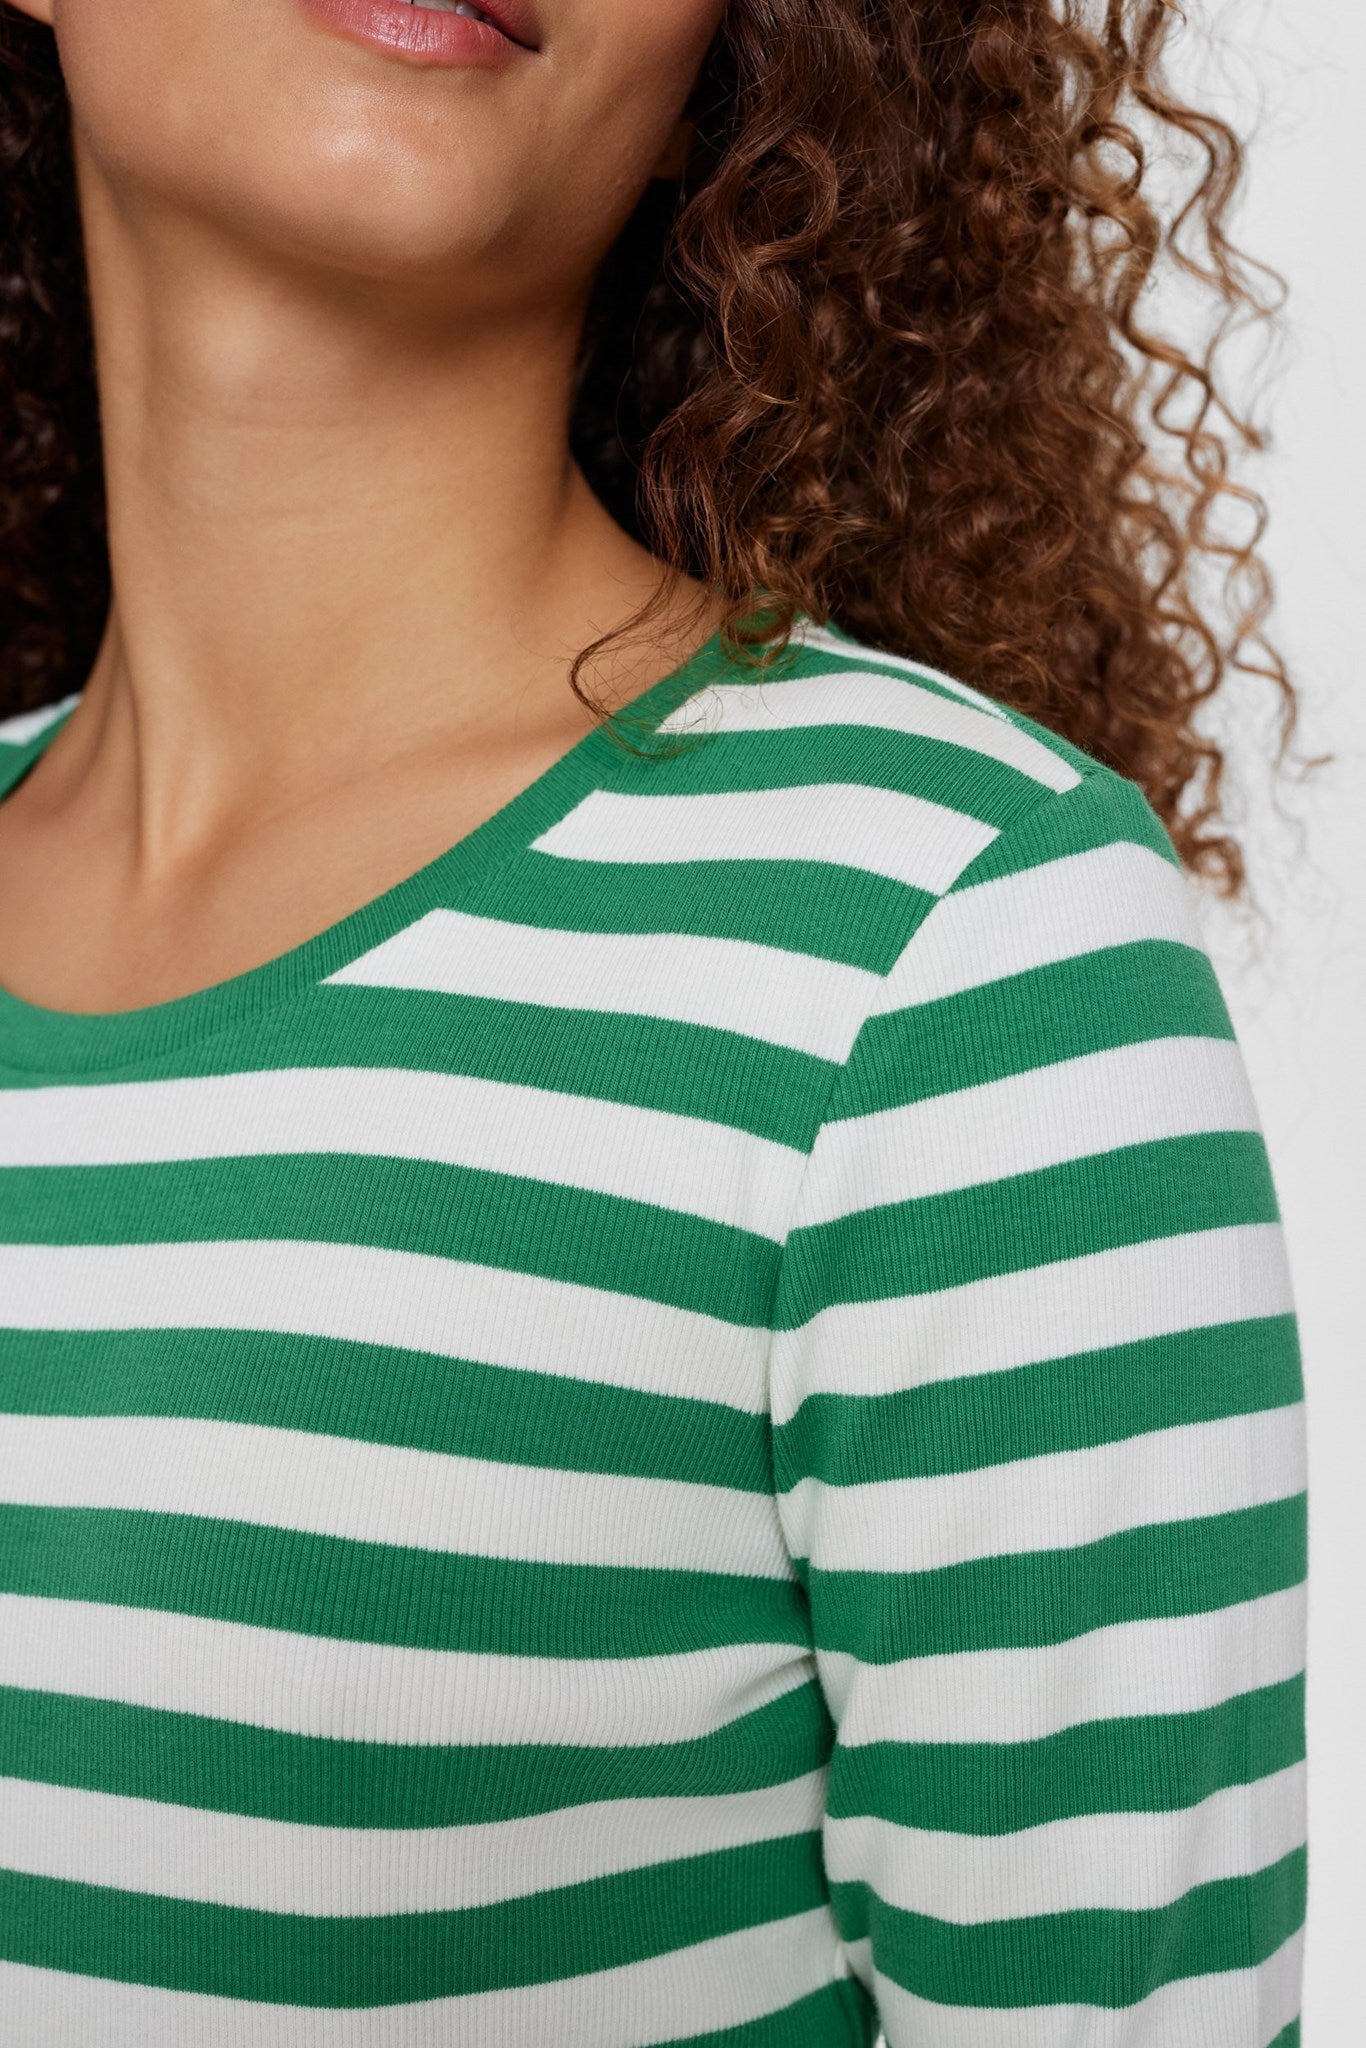 Camiseta de rayas verde de algodón orgánico